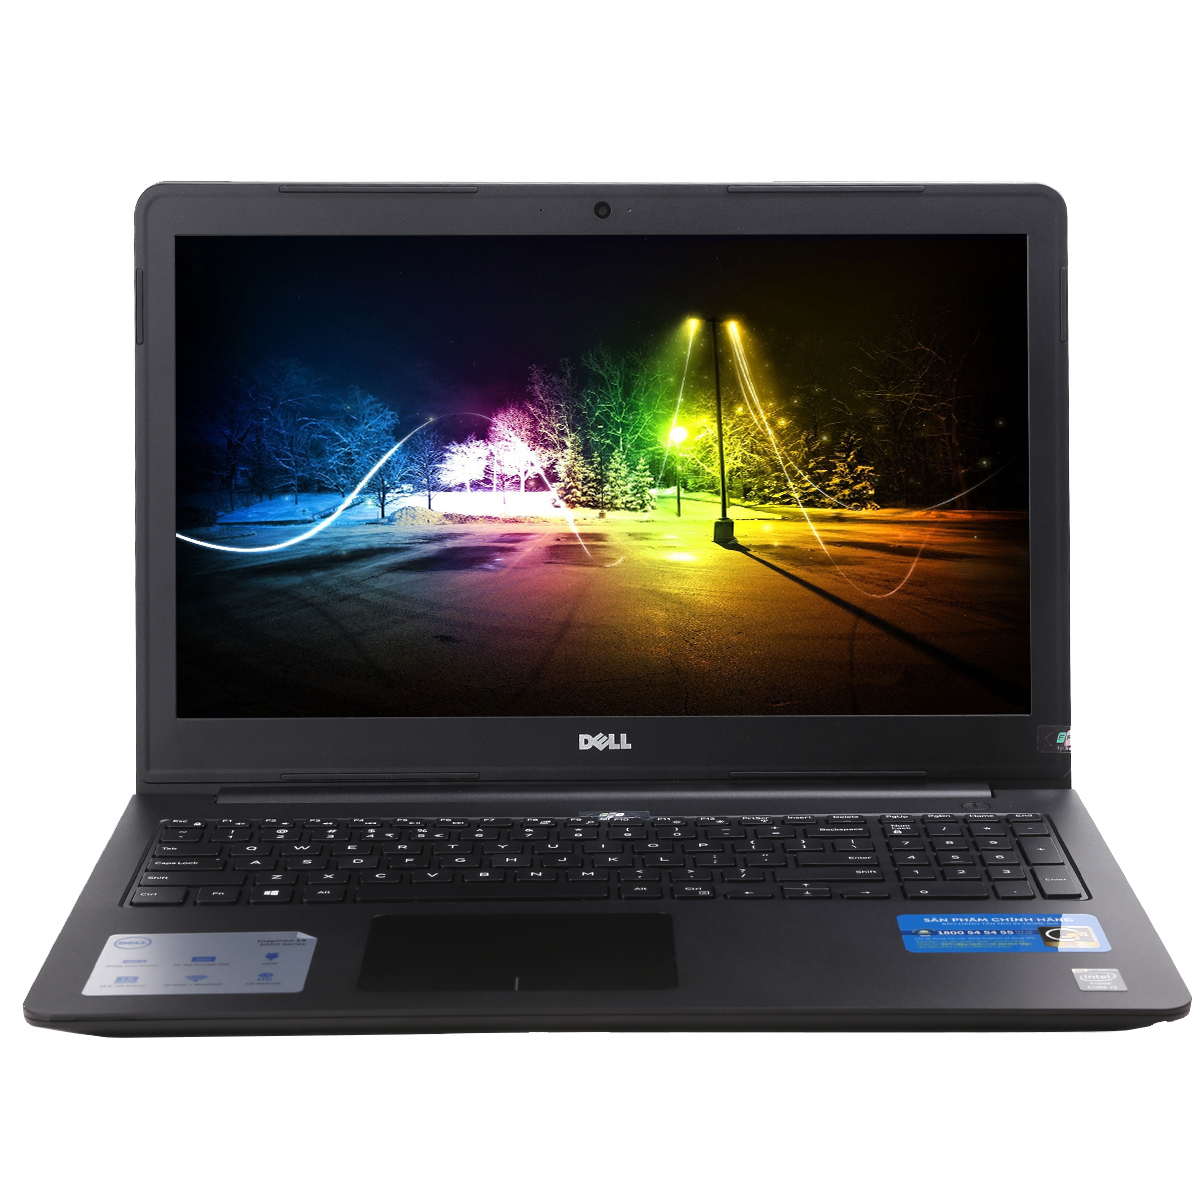 Laptop Dell Inspiron N5542 (70046717) - Intel Core i3-4005U, 4GB RAM, HDD 500GB, Intel HD Graphics 4400, 15.6 inch